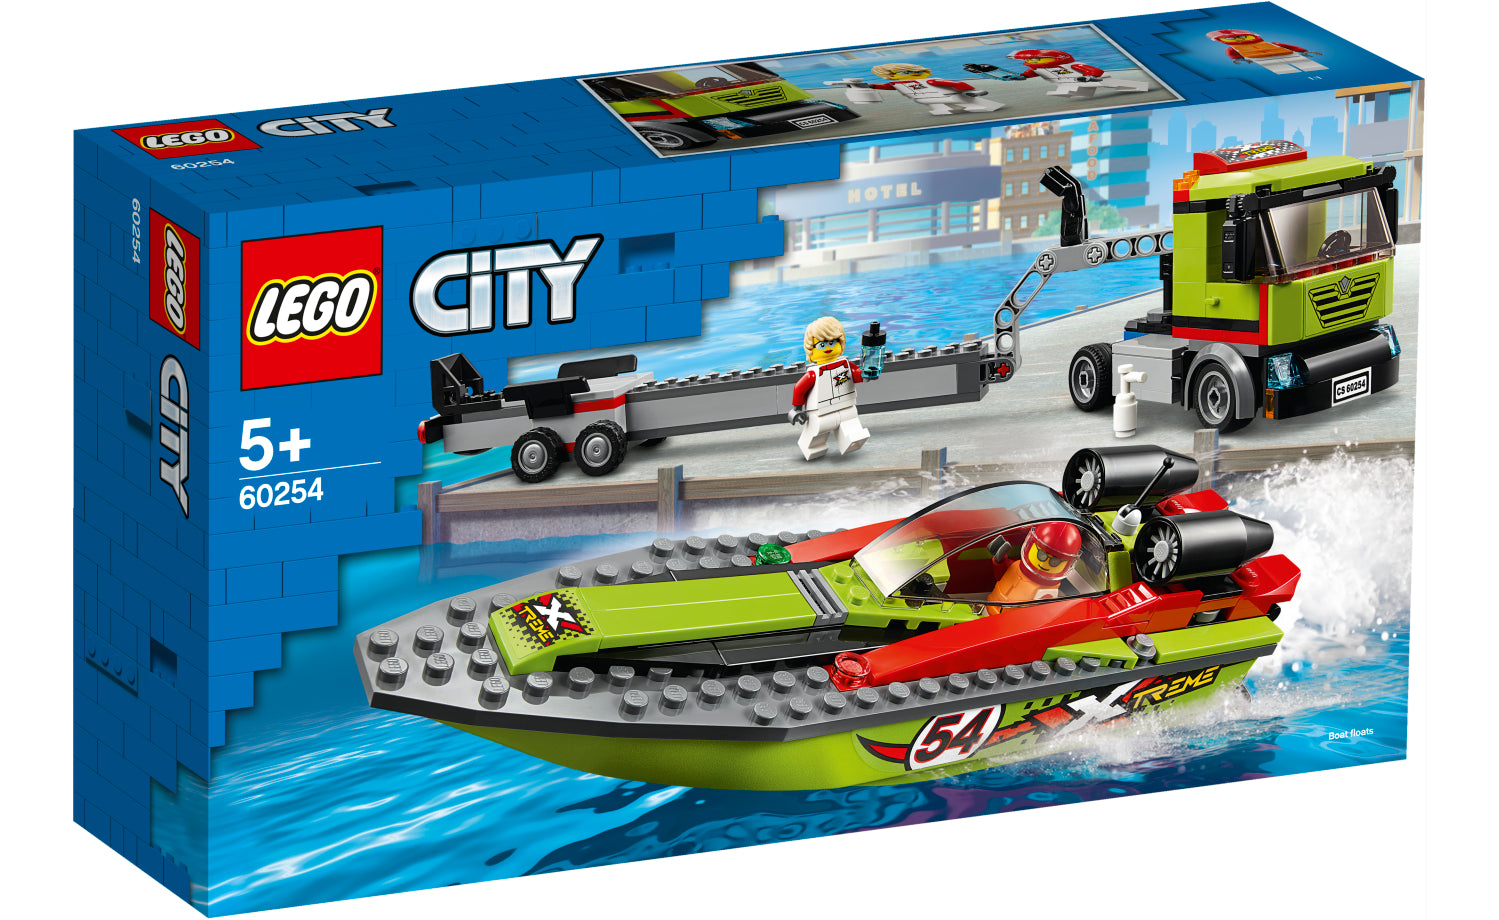 lego boat city